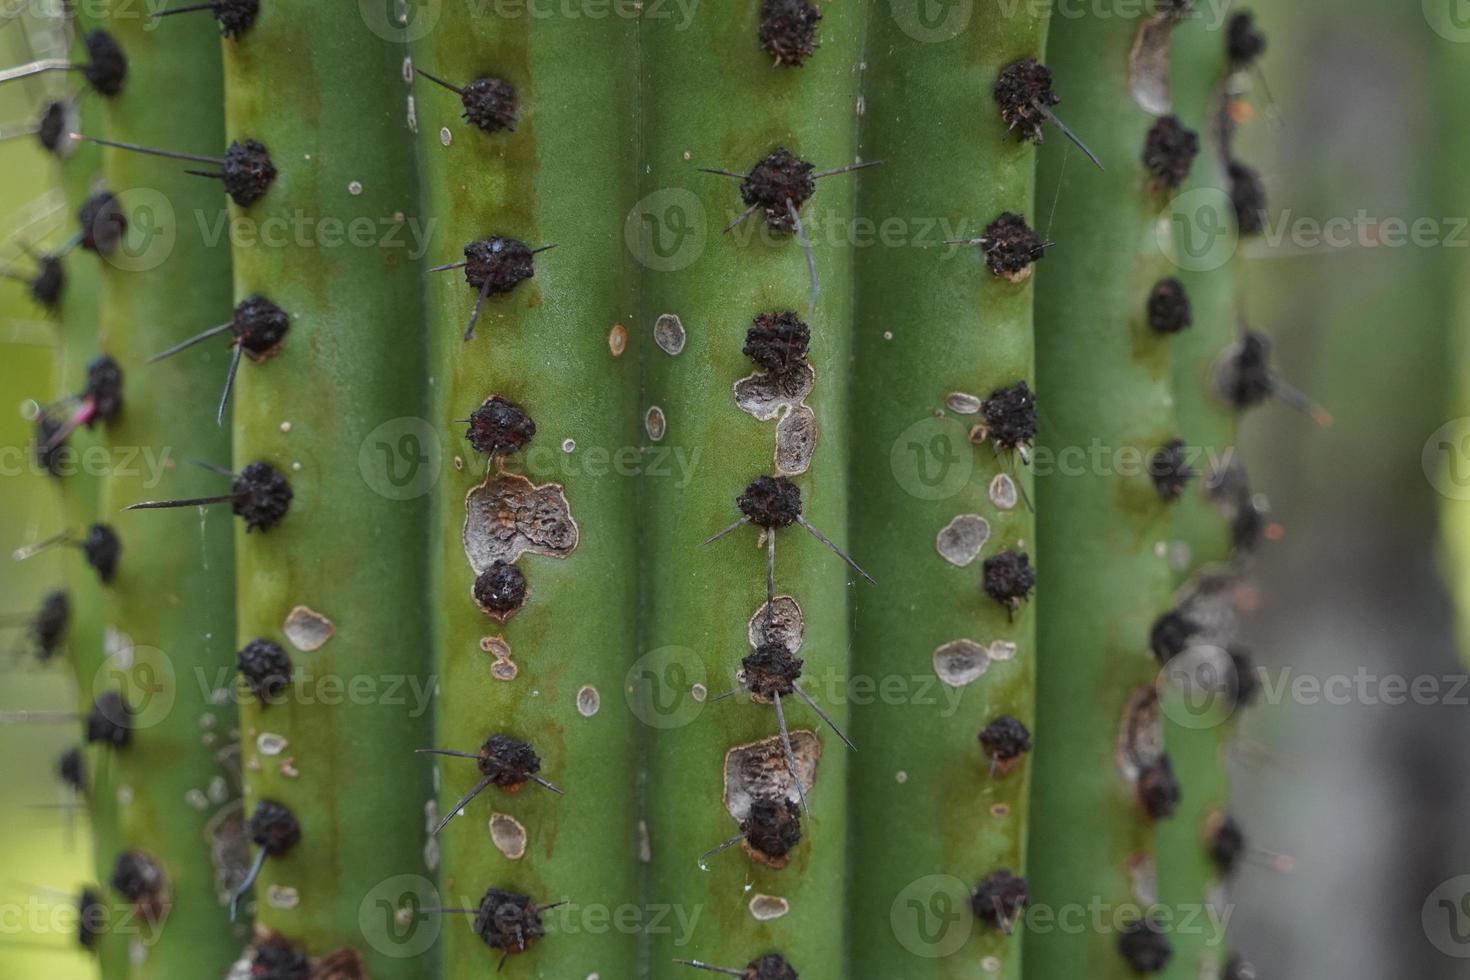 mexikansk kaktus taggar detalj i baja kalifornien foto